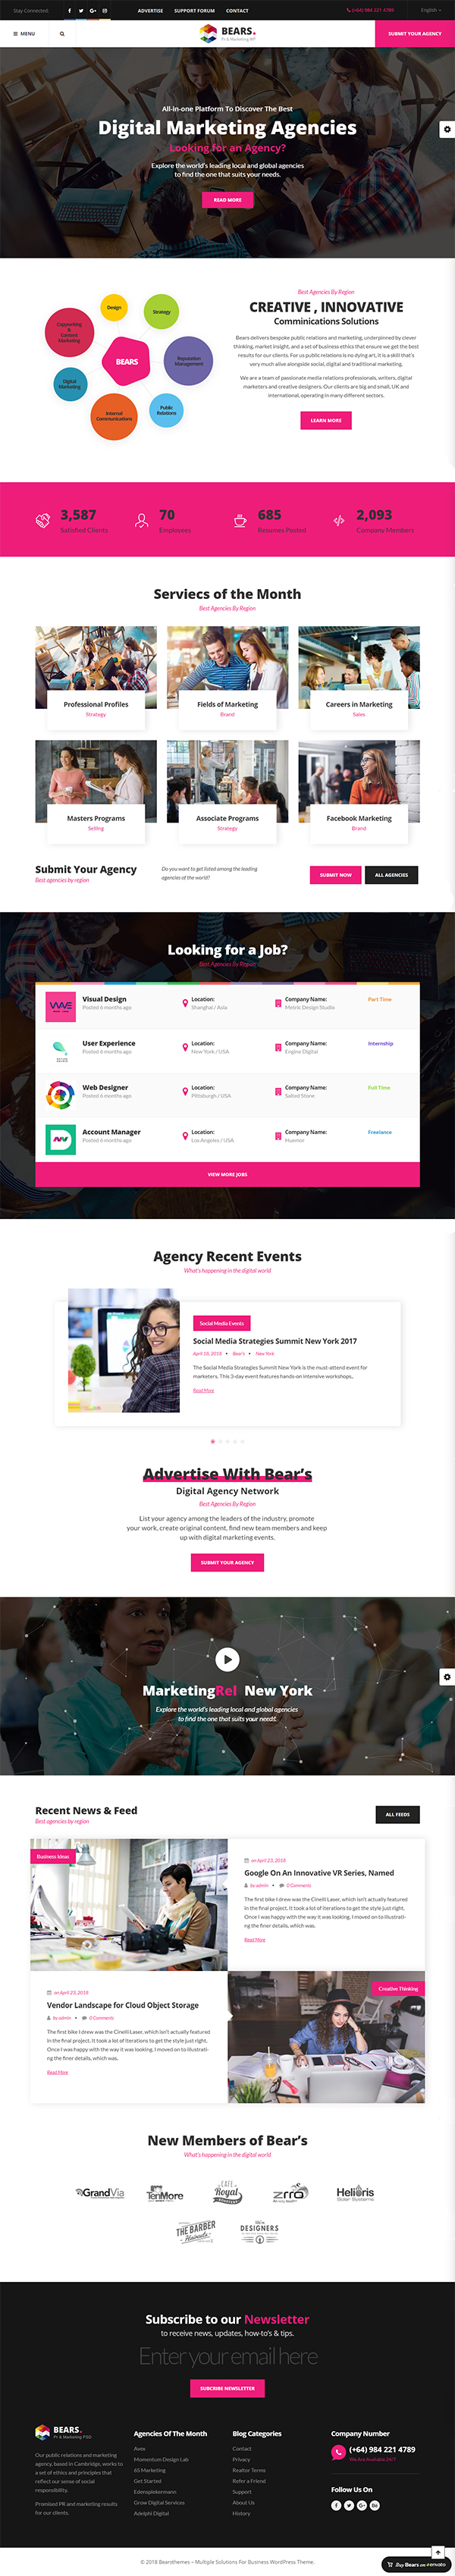 Bears - Multipurpose Business WordPress Theme